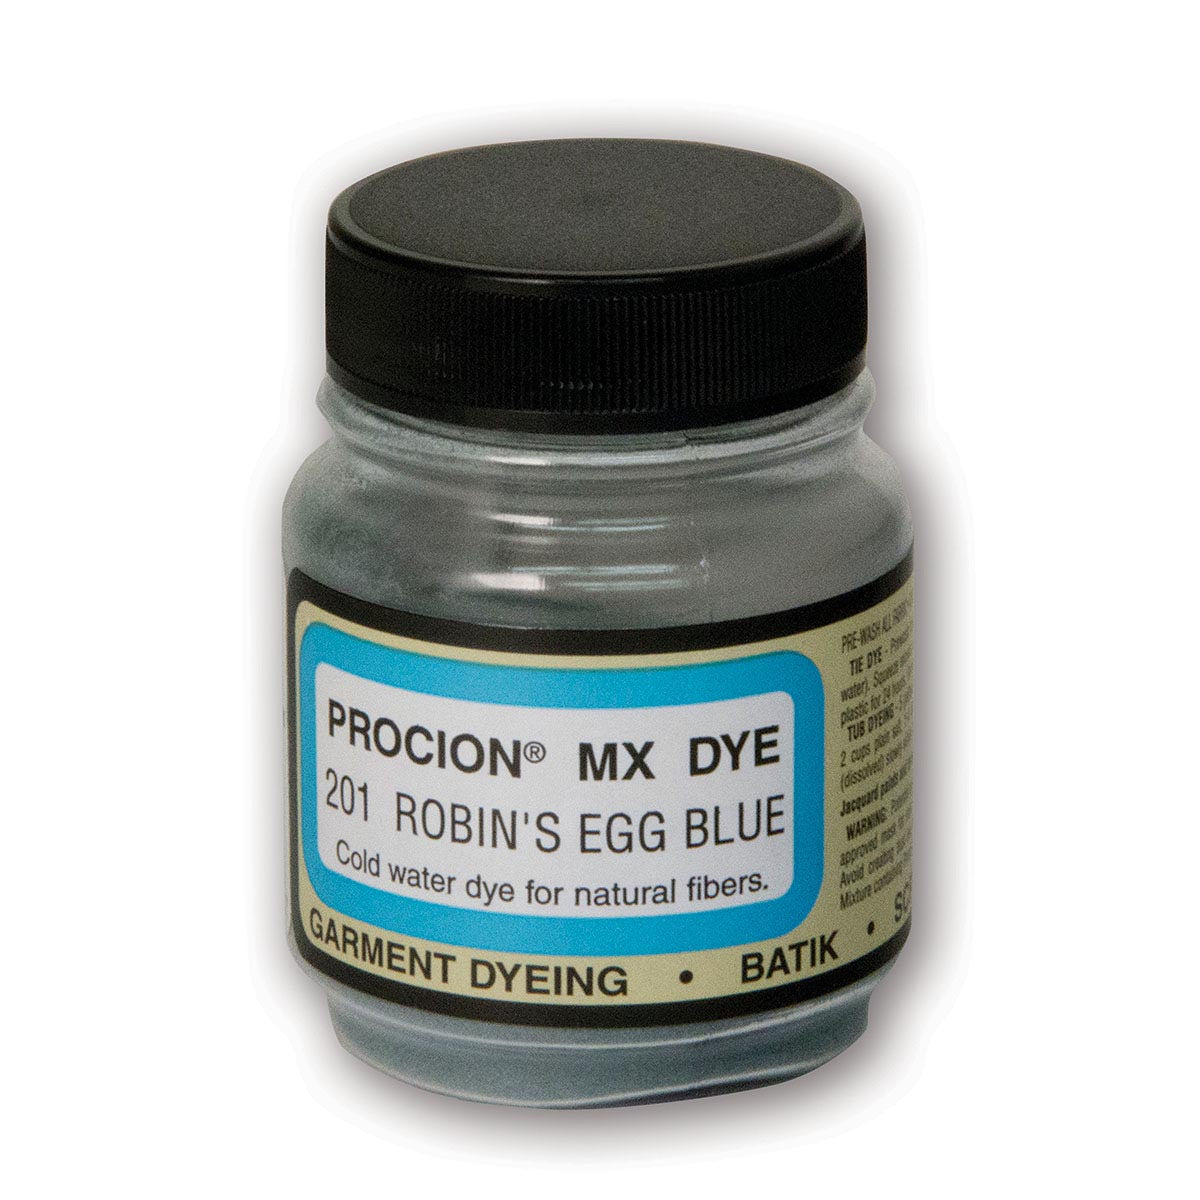 Jacquard - Procion MX Dye - Stoff Textil - Robins Egg Blue 201